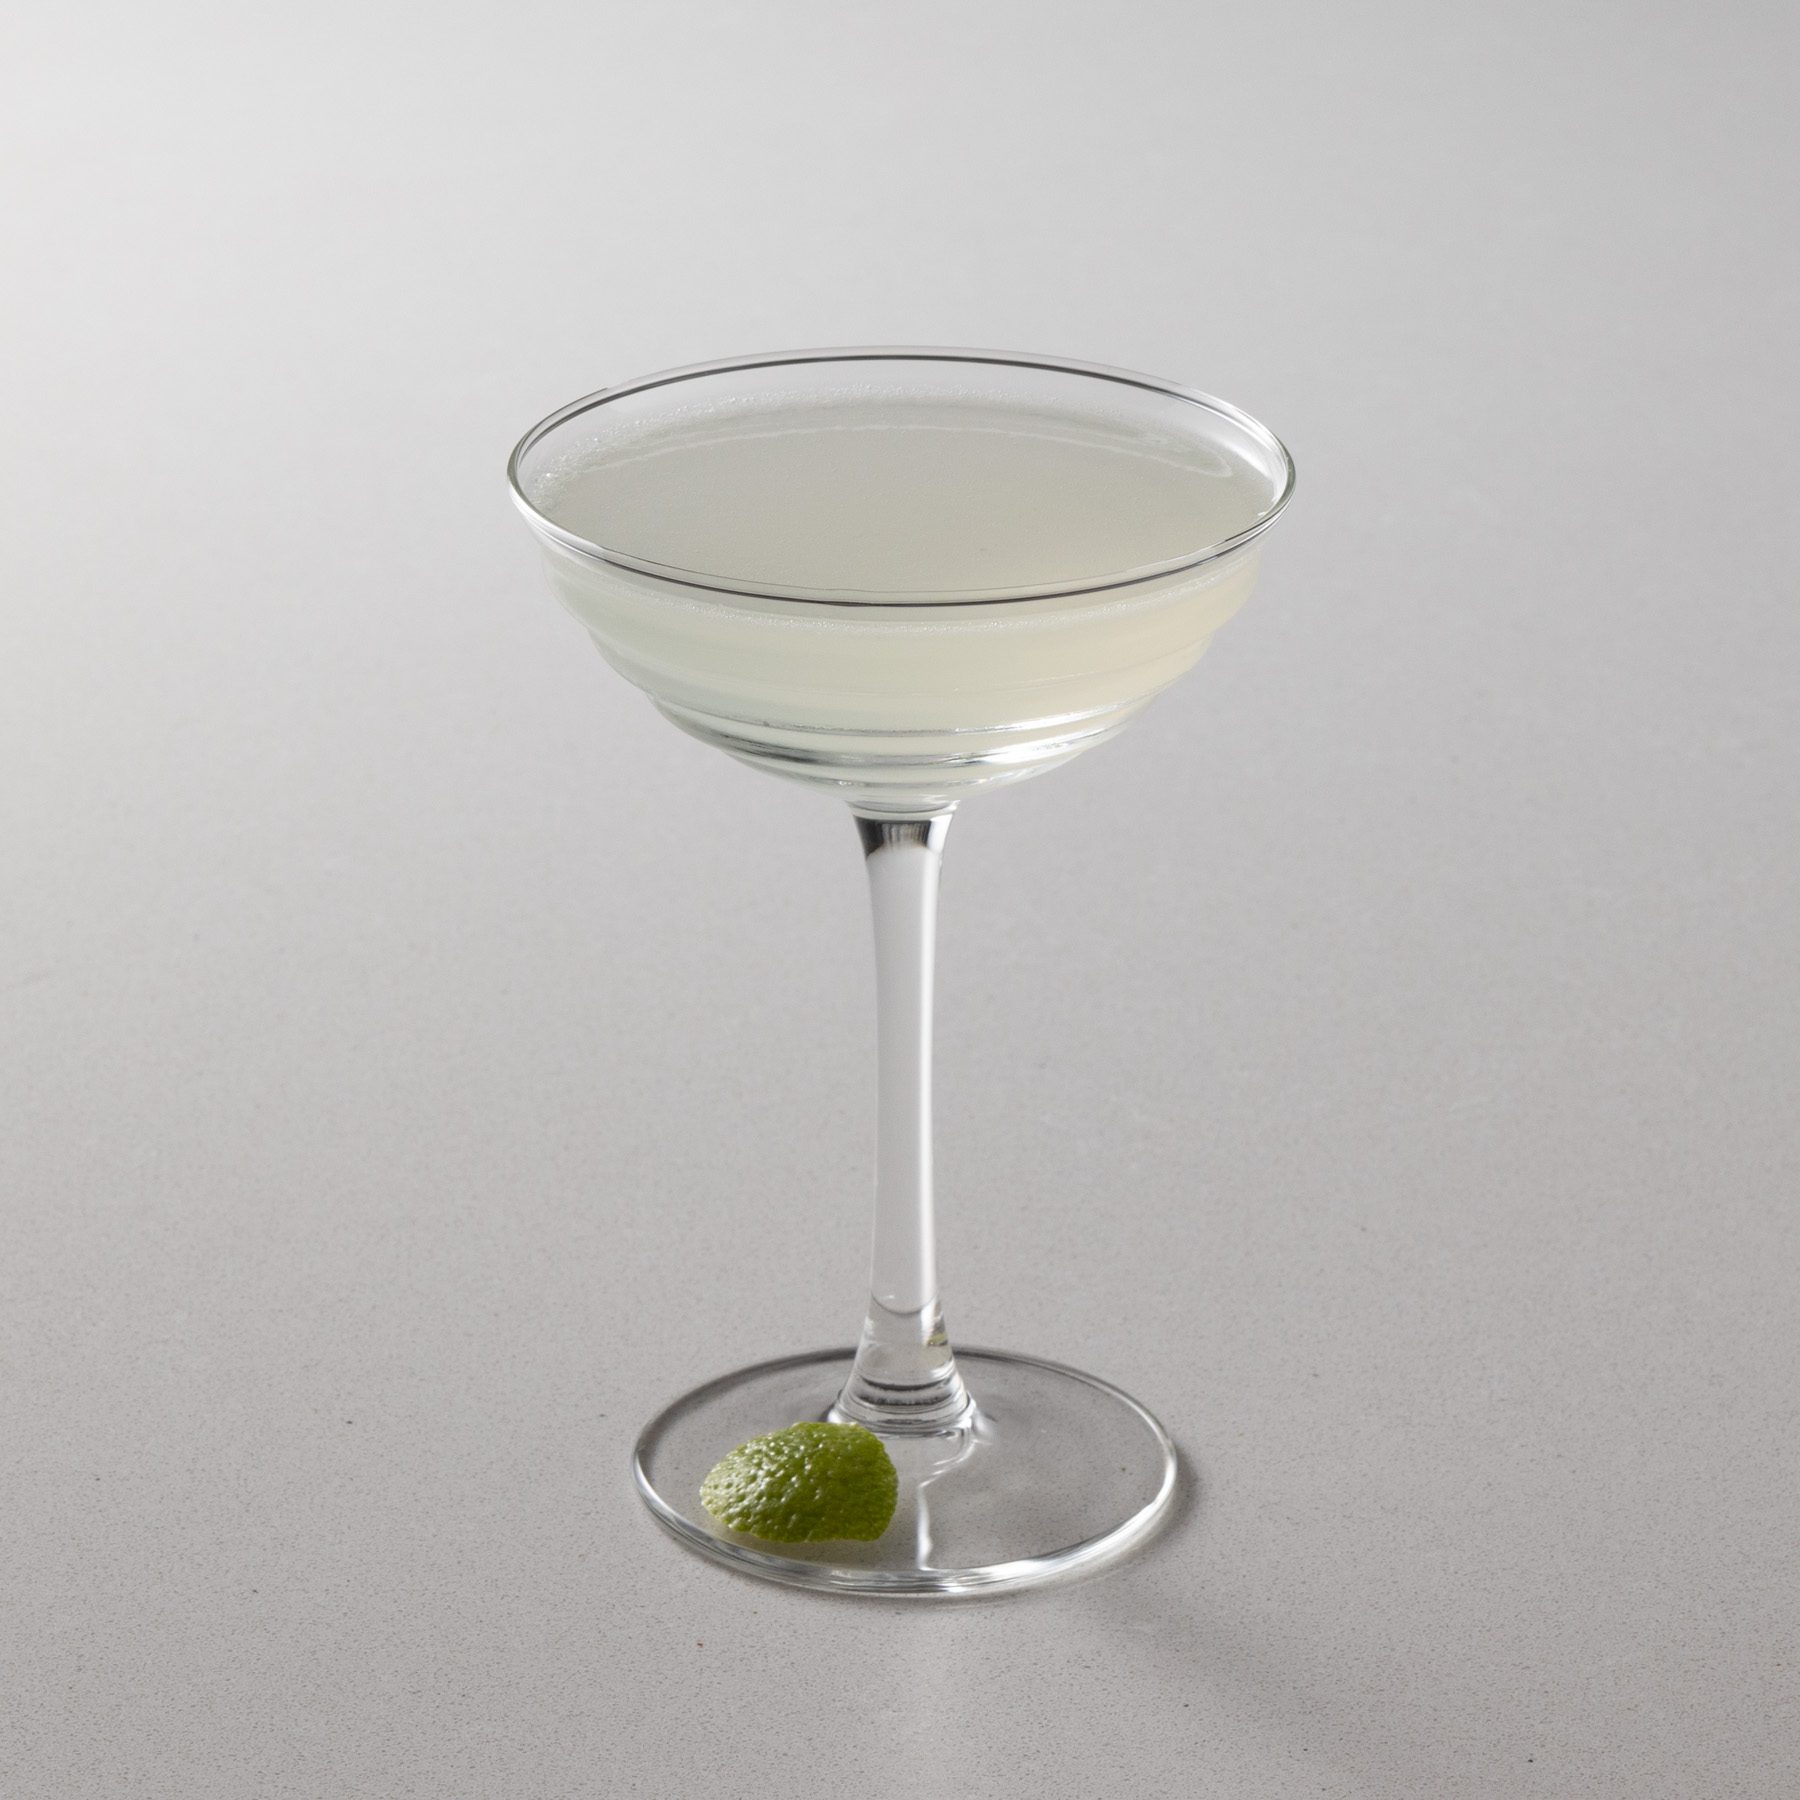 Grappa Gimlet cocktail